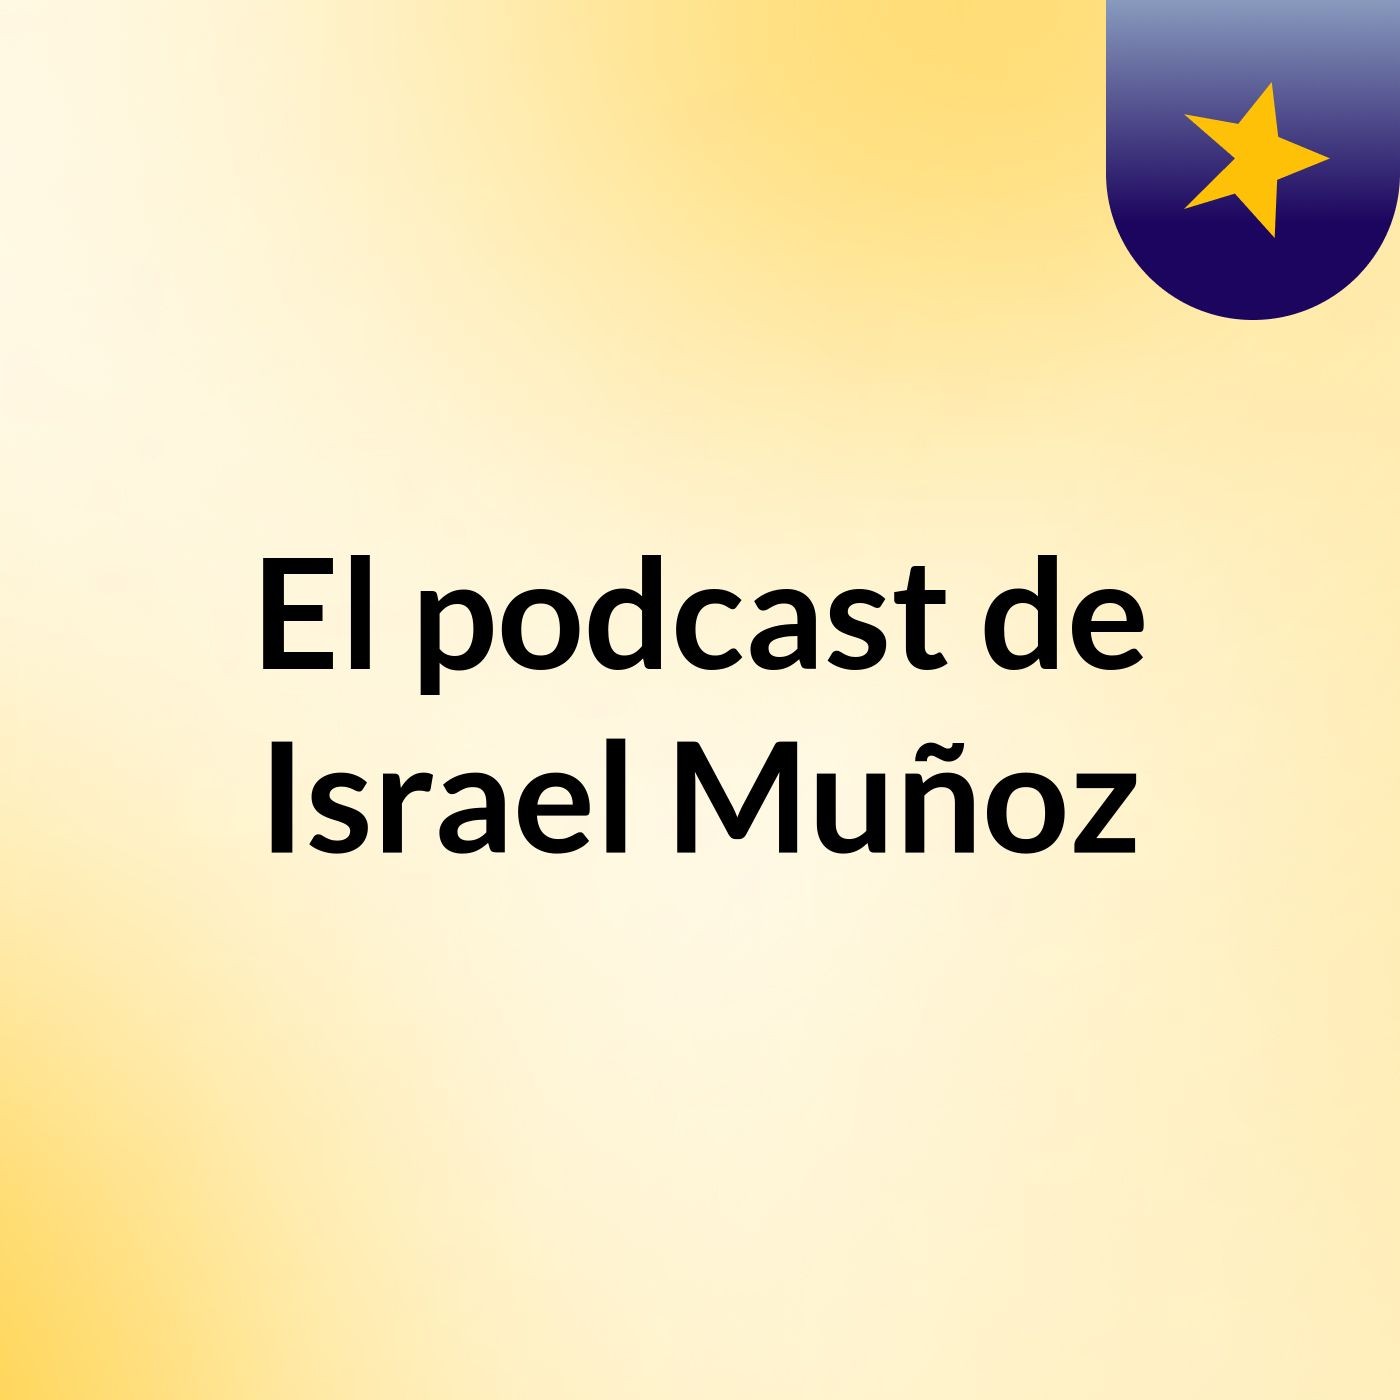 El podcast de Israel Muñoz